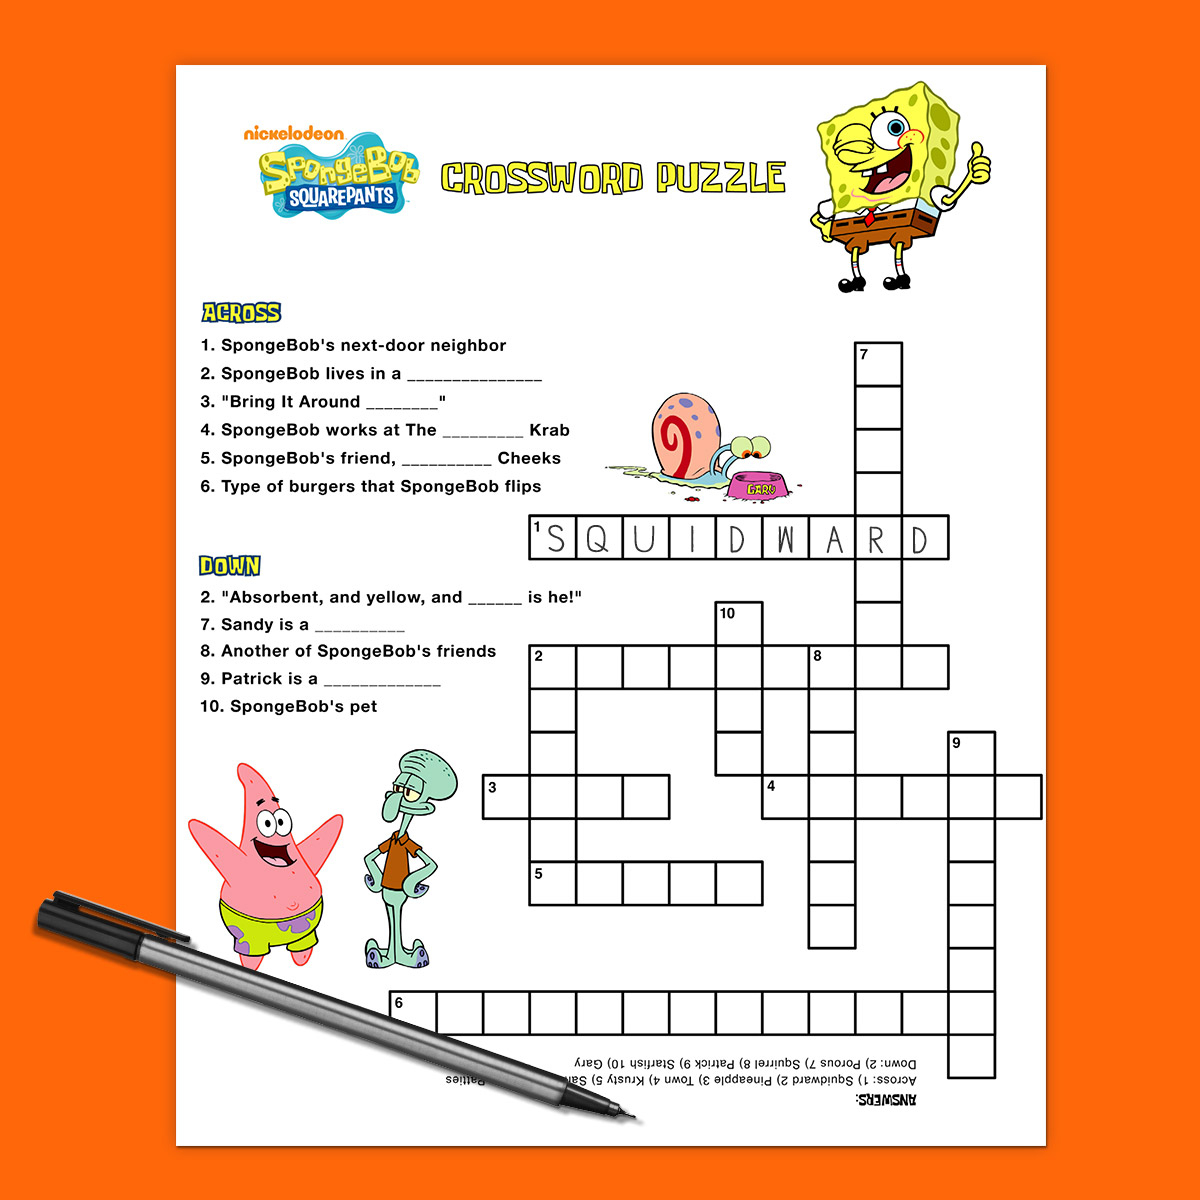 Spongebob Crossword Puzzle | Nickelodeon Parents - Teenage Crossword Puzzles Printable Free